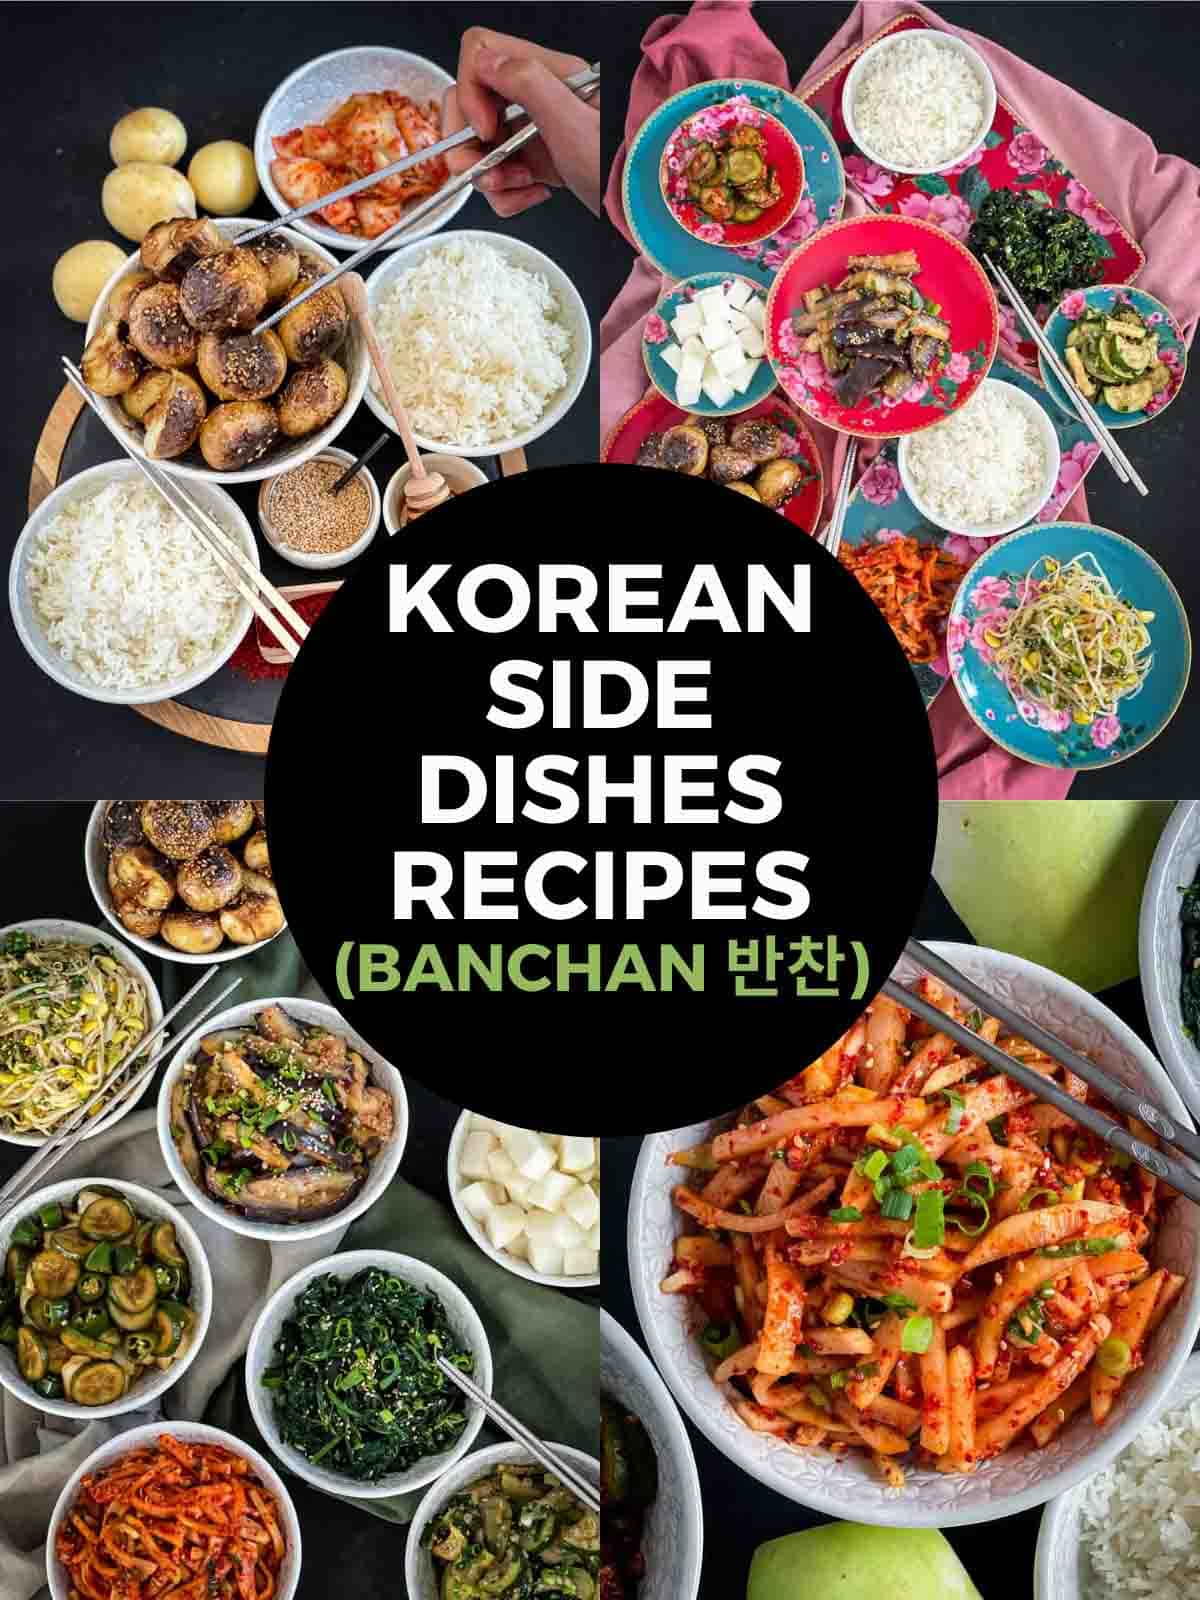 Korean Side Dishes Recipes - Banchan